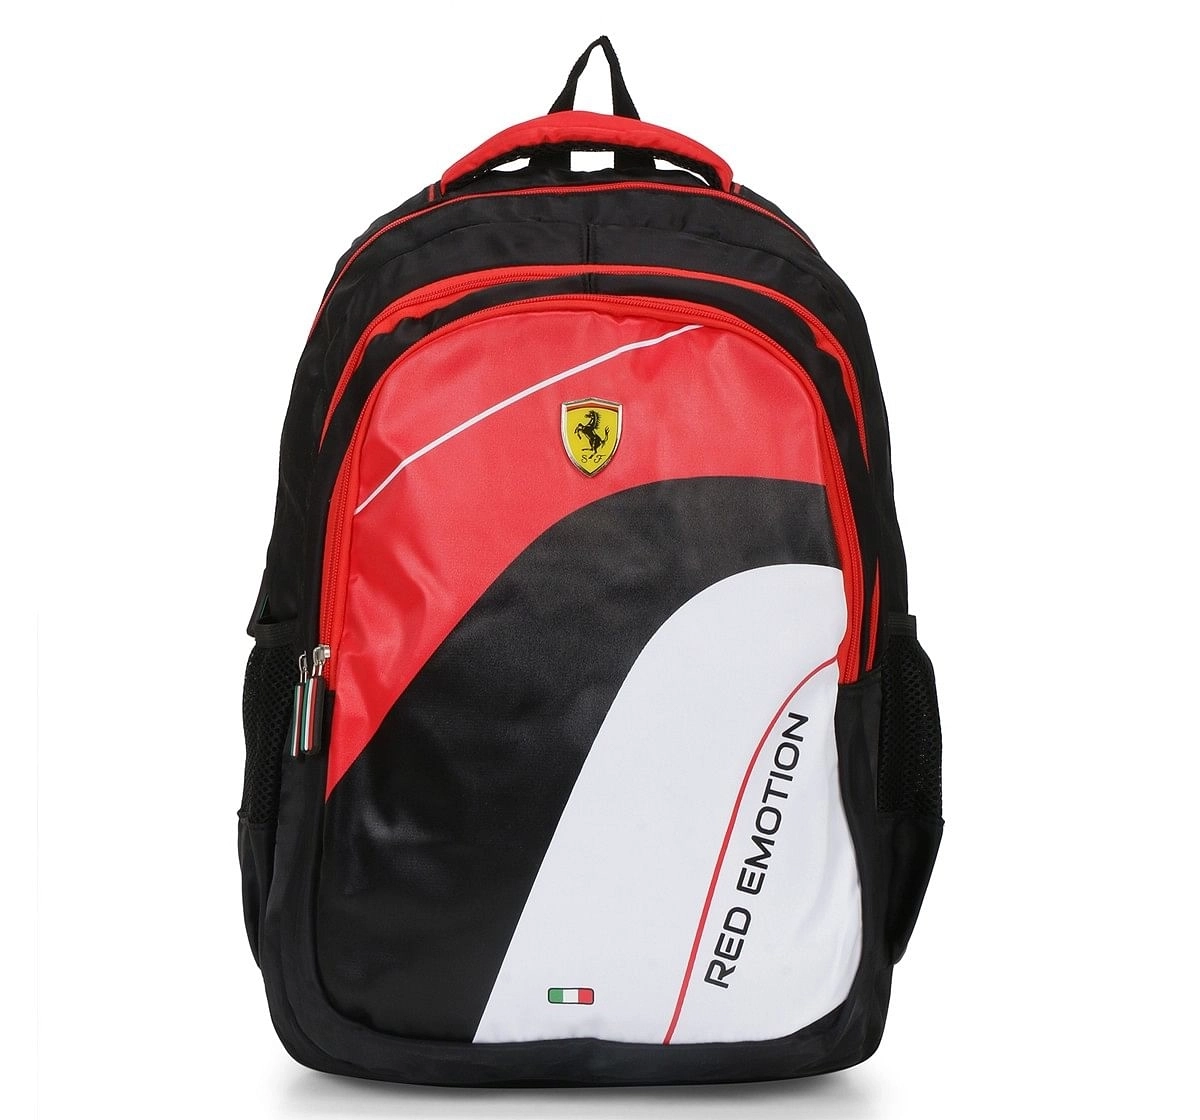 Ferrari Red Emotion 19 Backpack School bags for kids Multicolor 3Y+